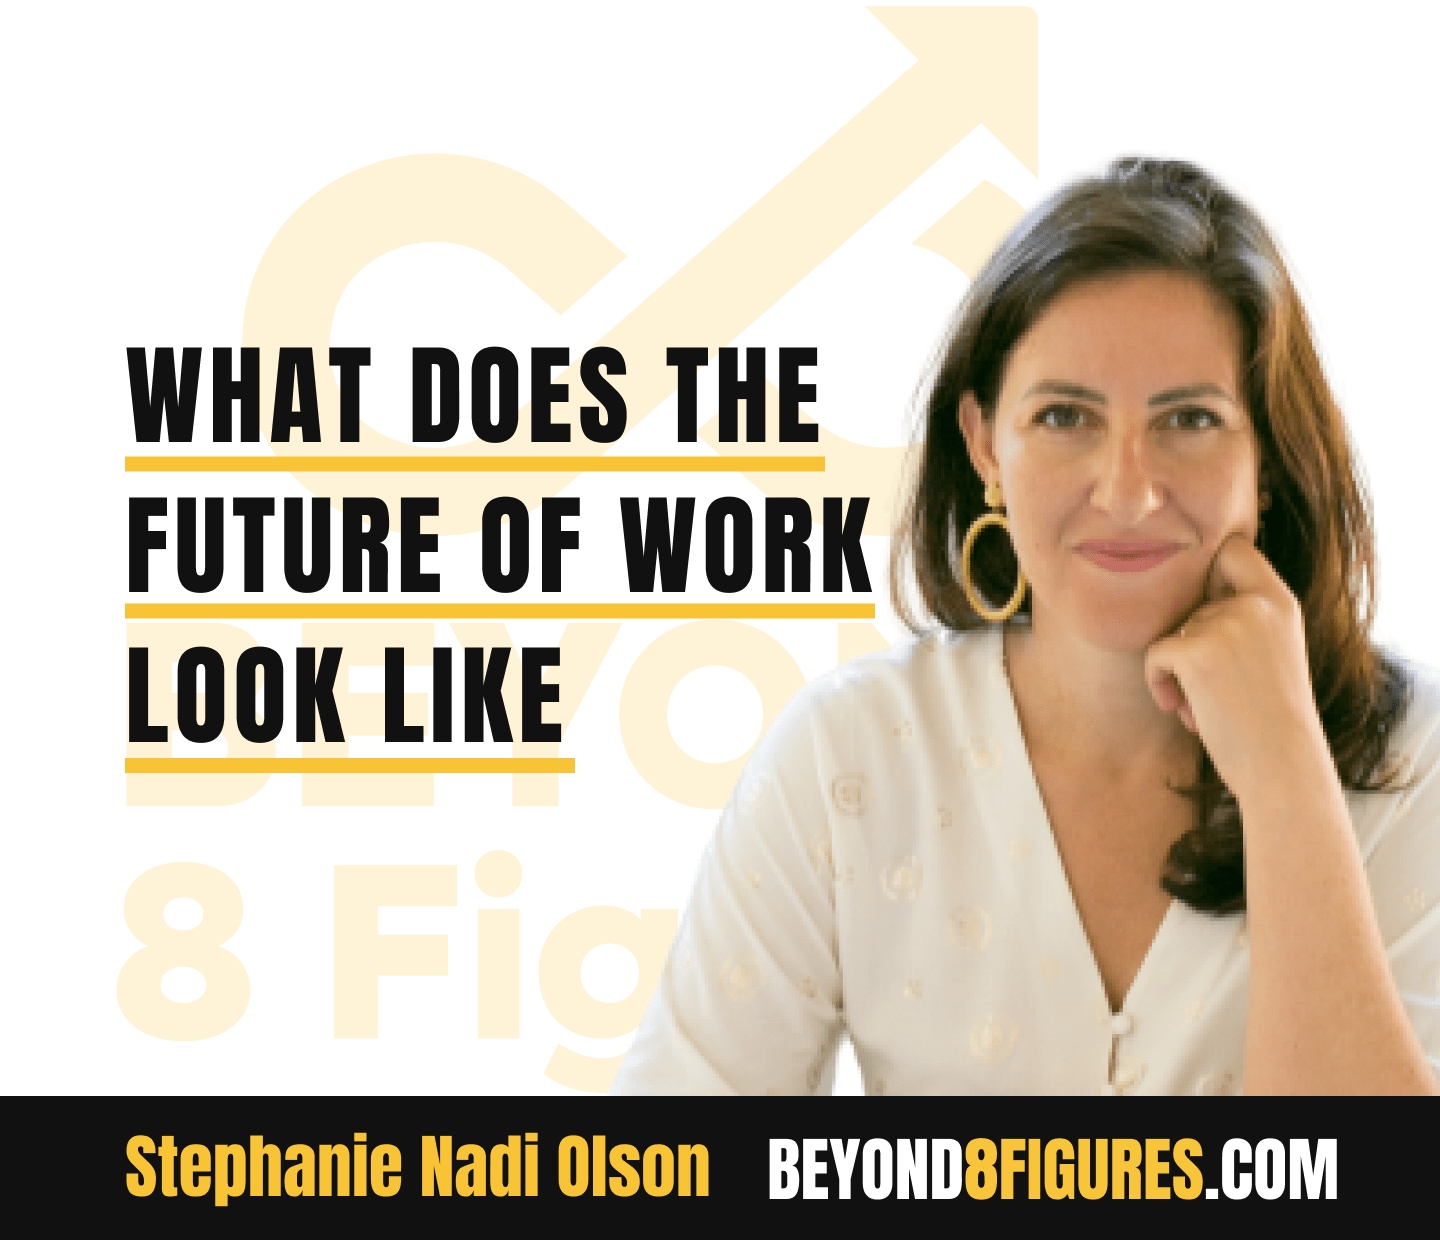 Stephanie Nadi Olson on BEYOND 8 Figures Podcast